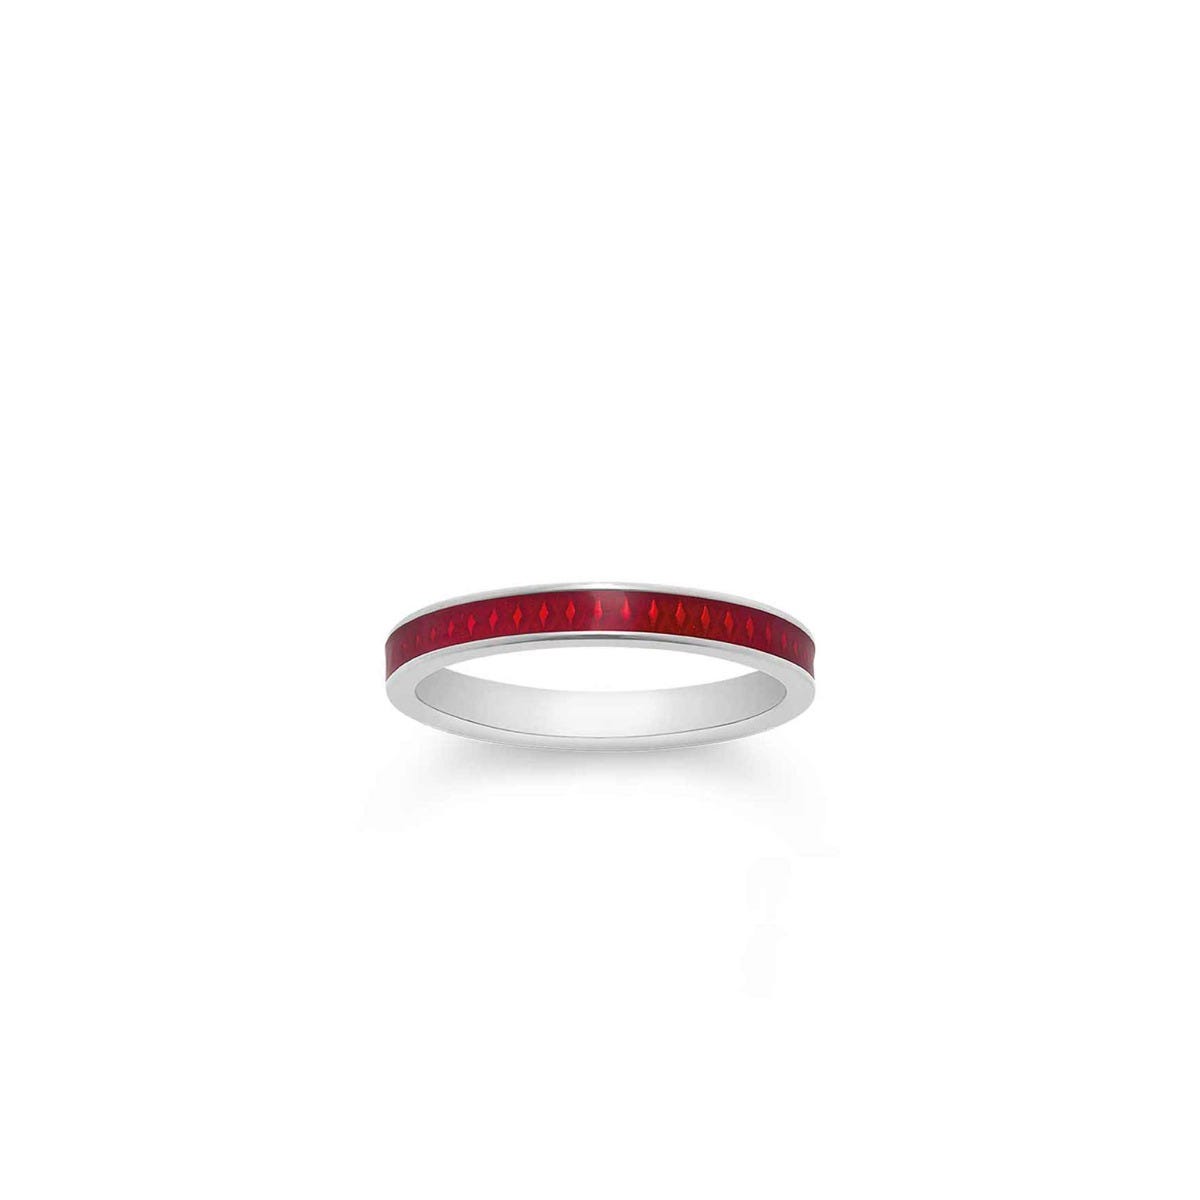 167 Enamel Ring in White Gold 3mm, Red